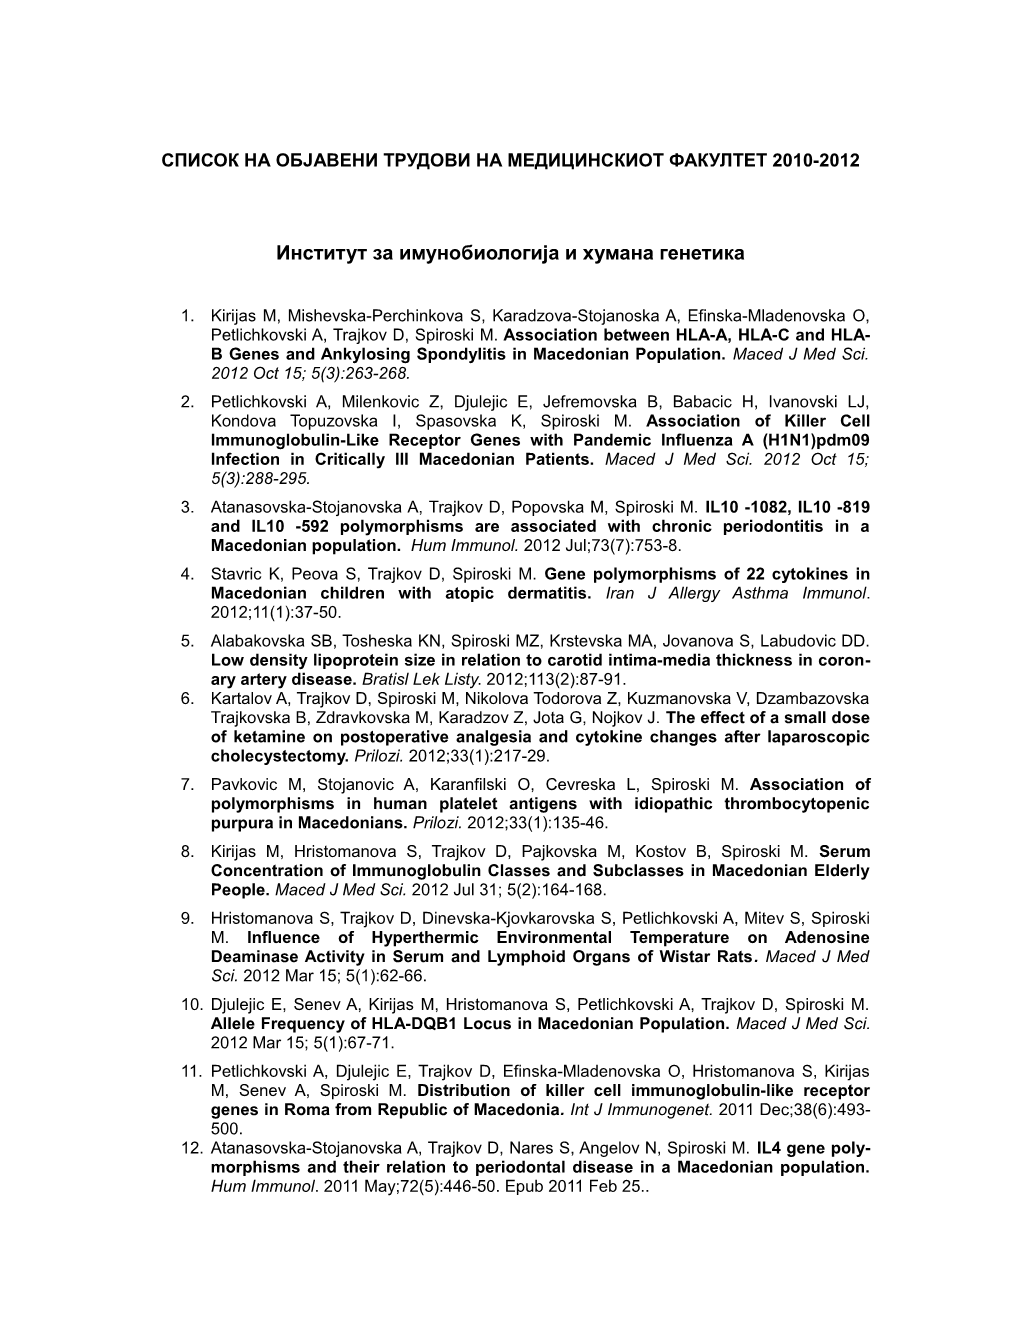 Kirijas M, Mishevska-Perchinkova S, Karadzova-Stojanoska A, Efinska-Mladenovska O, Petlichkovski